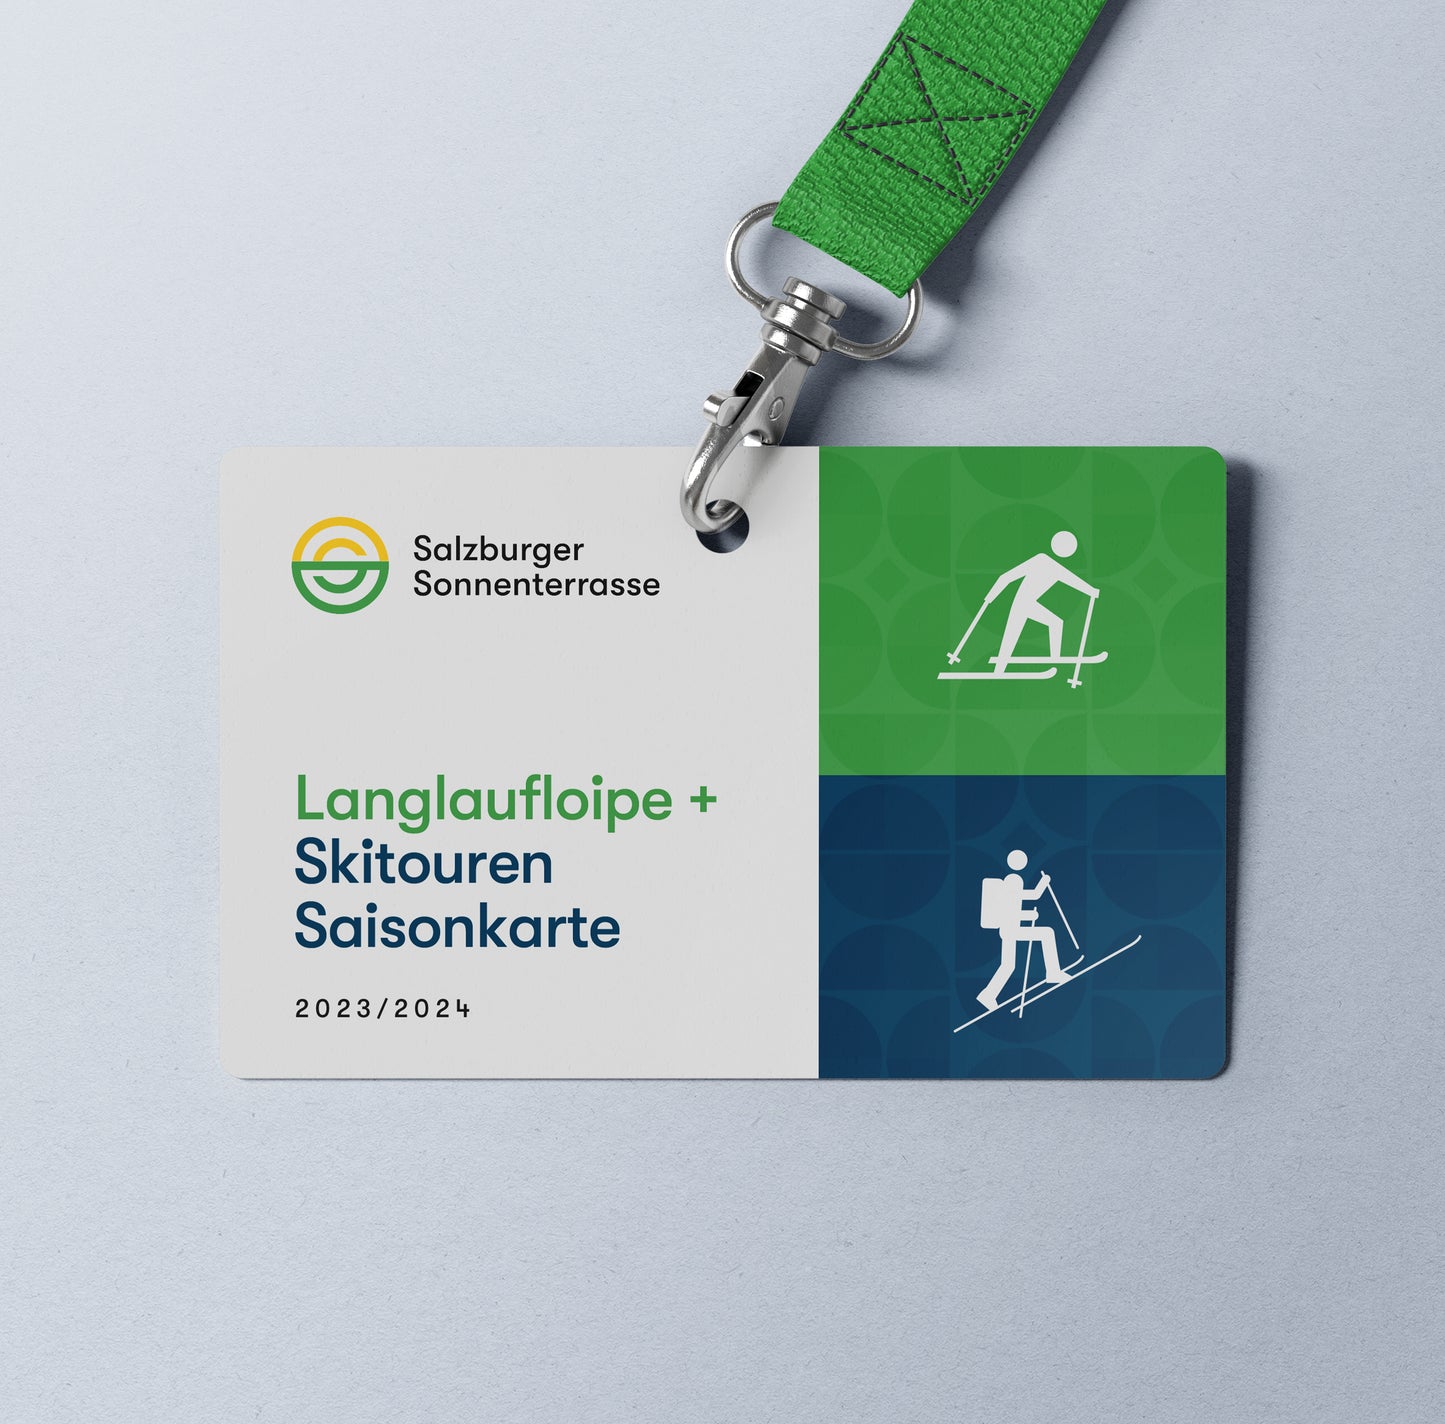 Langlaufloipe & Skitouren Saisonkarte 2023/24